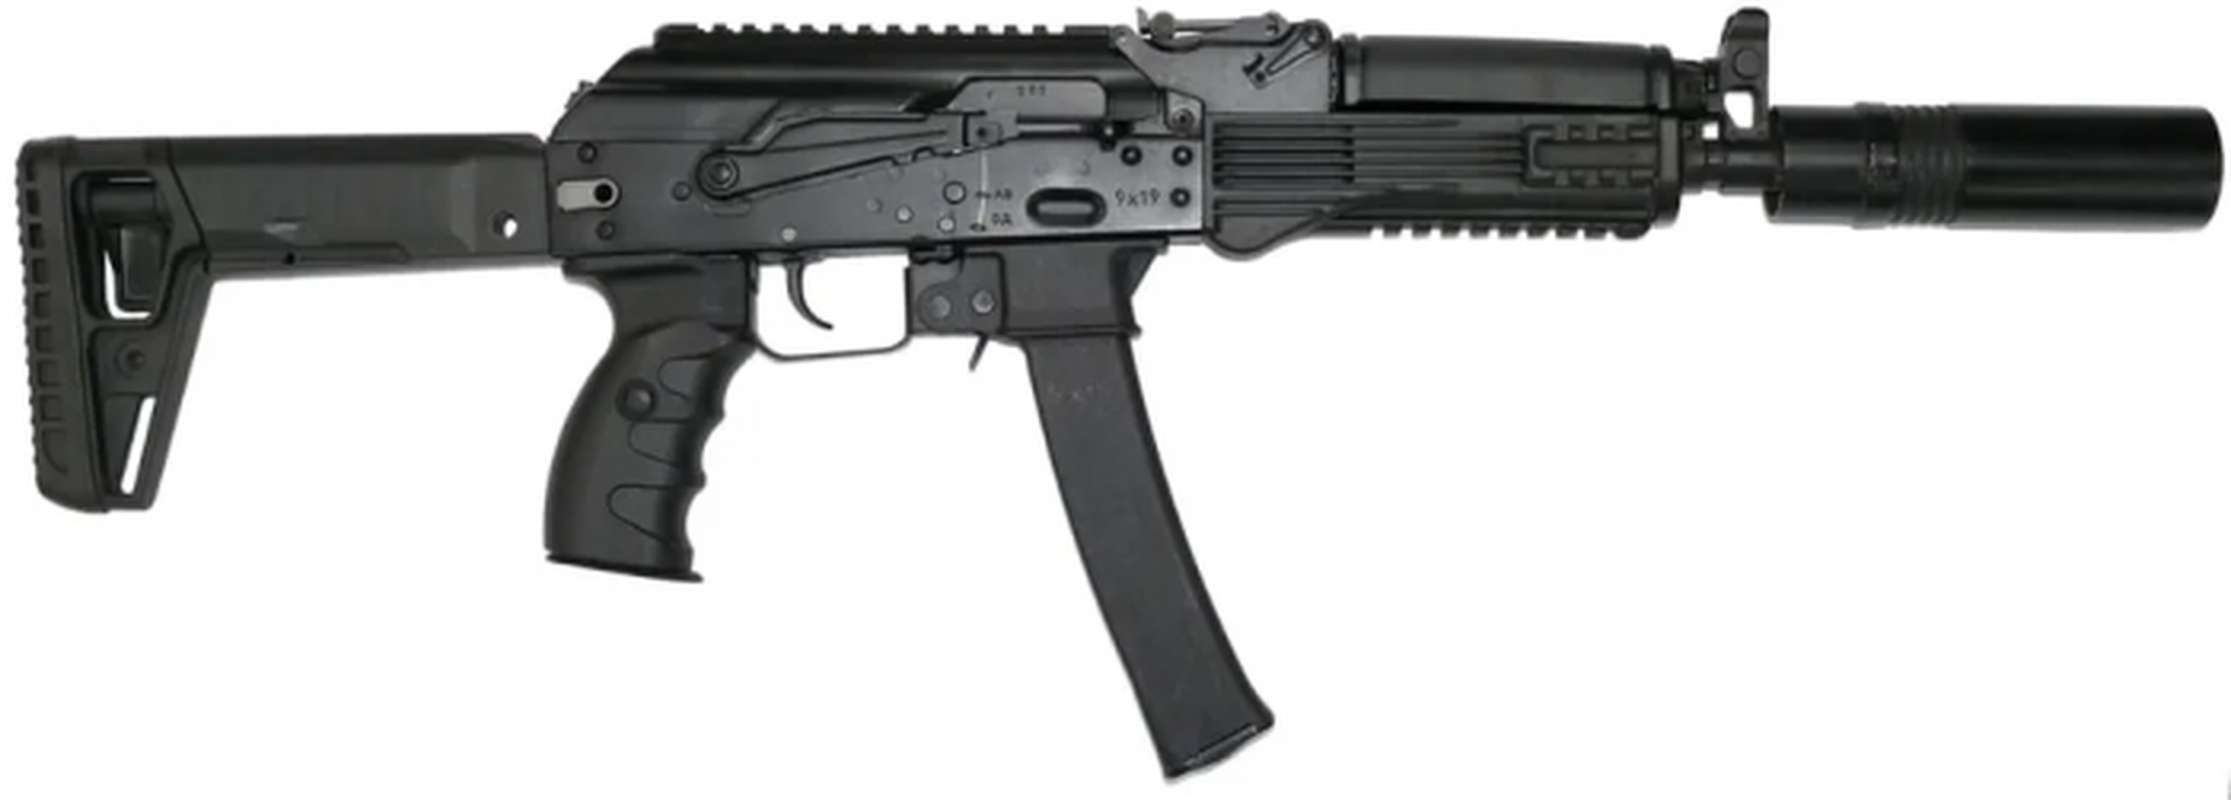 Tieu lien Kalashnikov PPK-20 moi nhat cua dong AK huyen thoai-Hinh-13